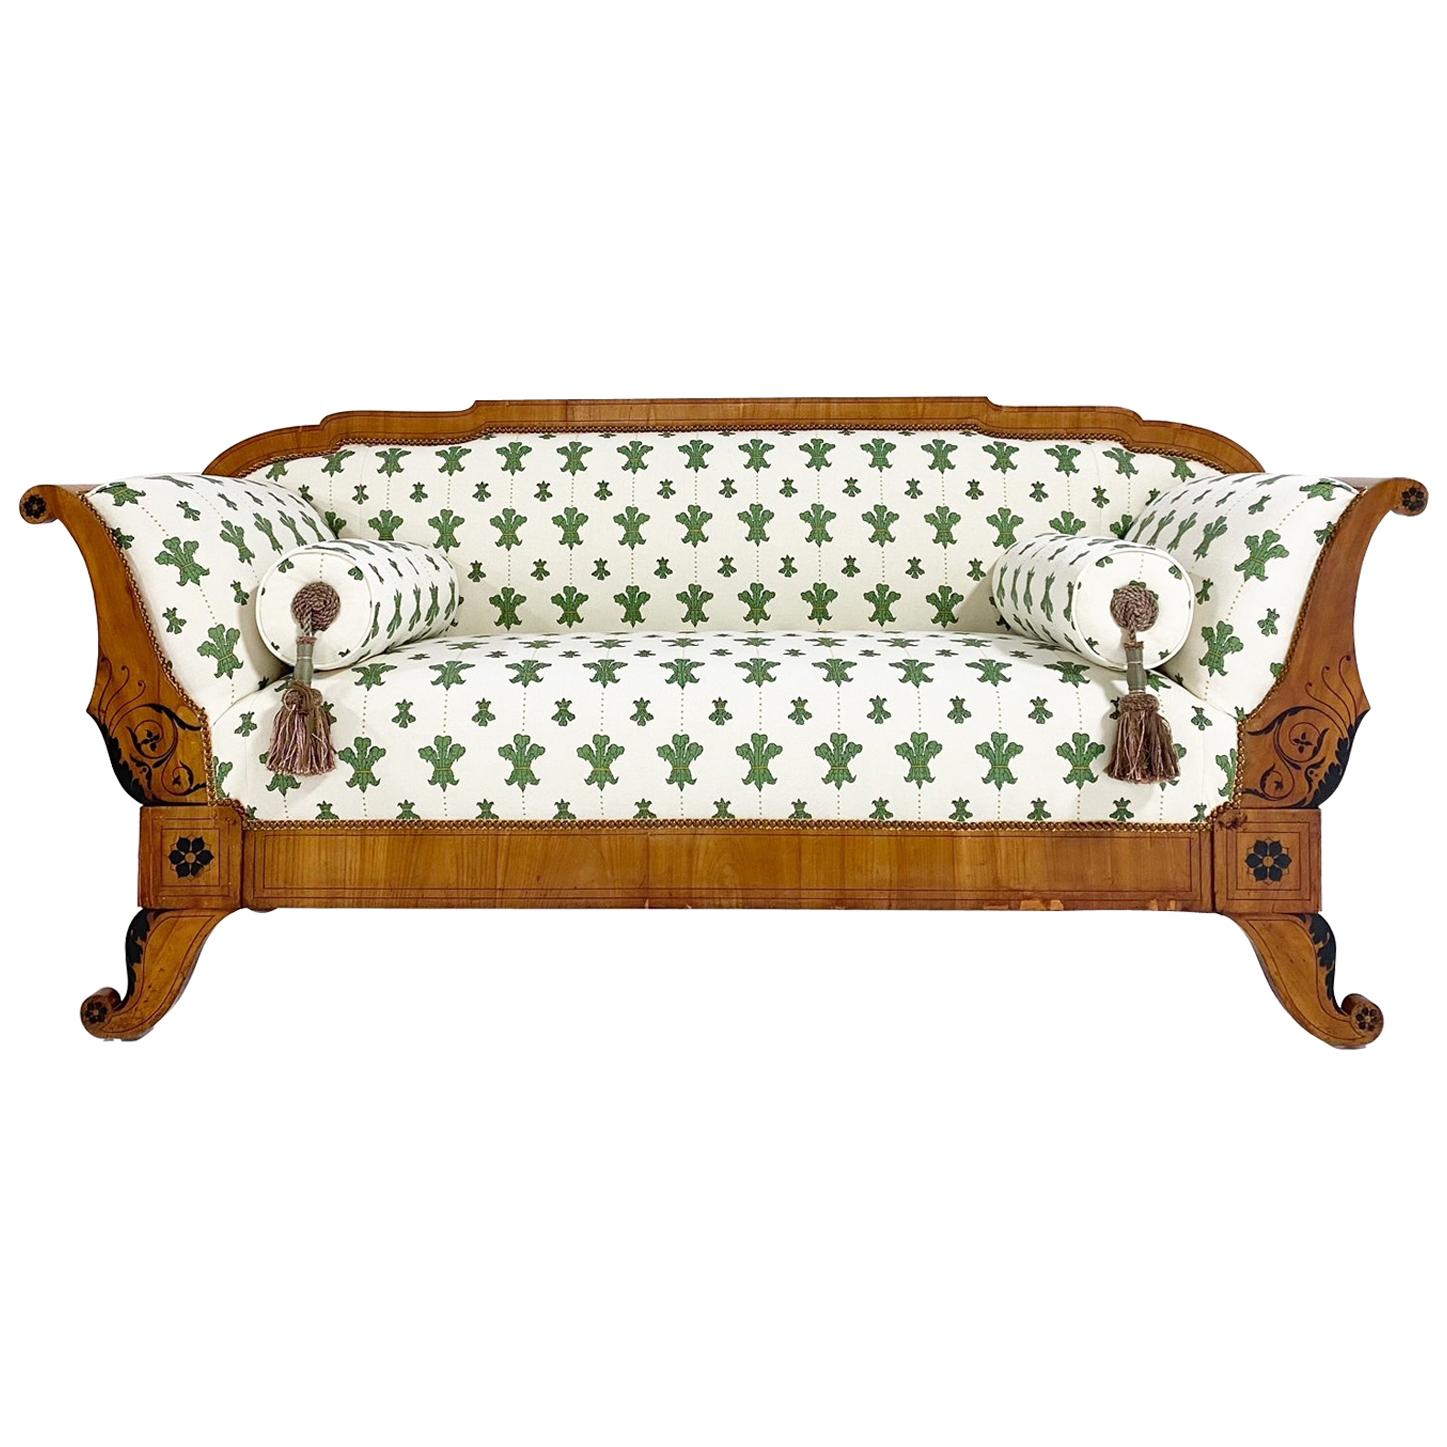 19th Century Biedermeier Ebonized Walnut Sofa in Beata Heuman Florentine Flowers